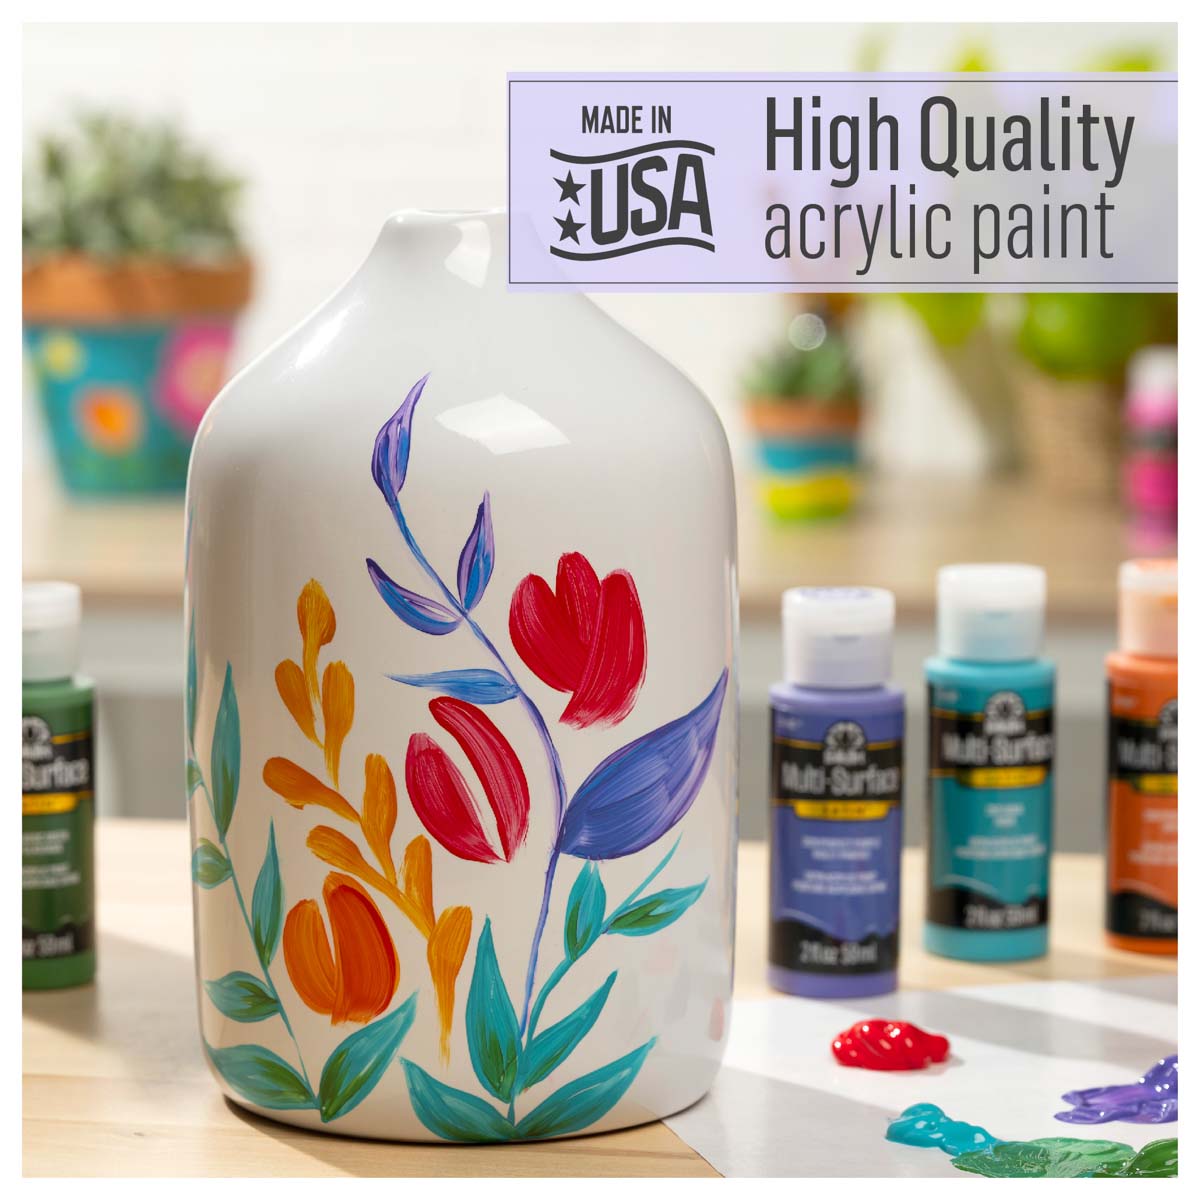 FolkArt ® Multi-Surface Satin Acrylic Paints - Pure Orange, 2 oz. - 2903